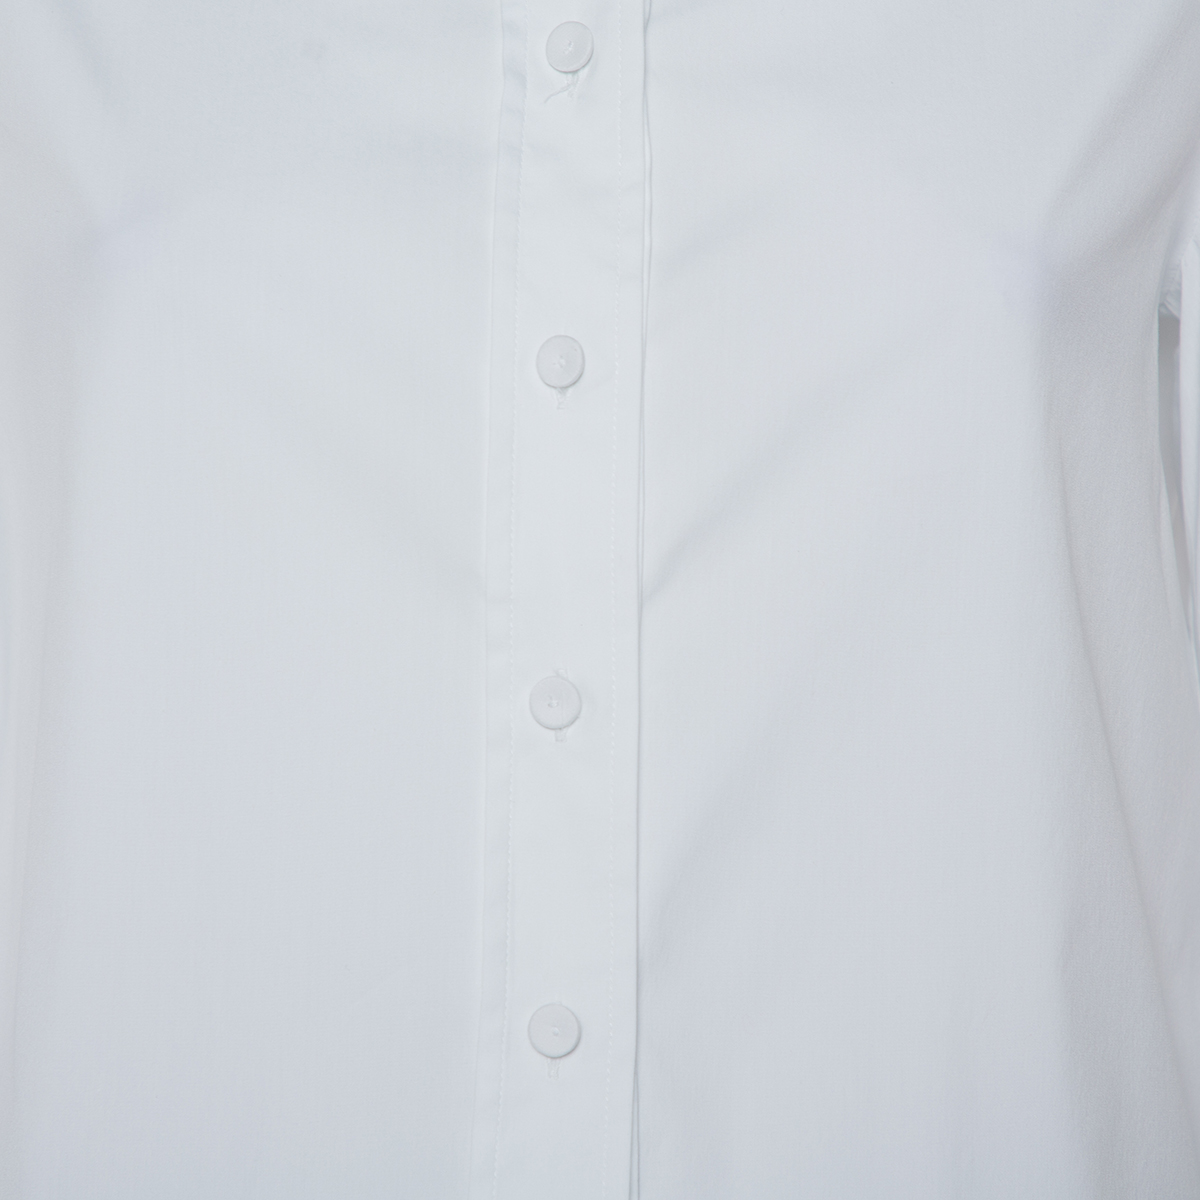 Emporio Armani White Cotton Extended Collar Detail Button Front Boxy Shirt M